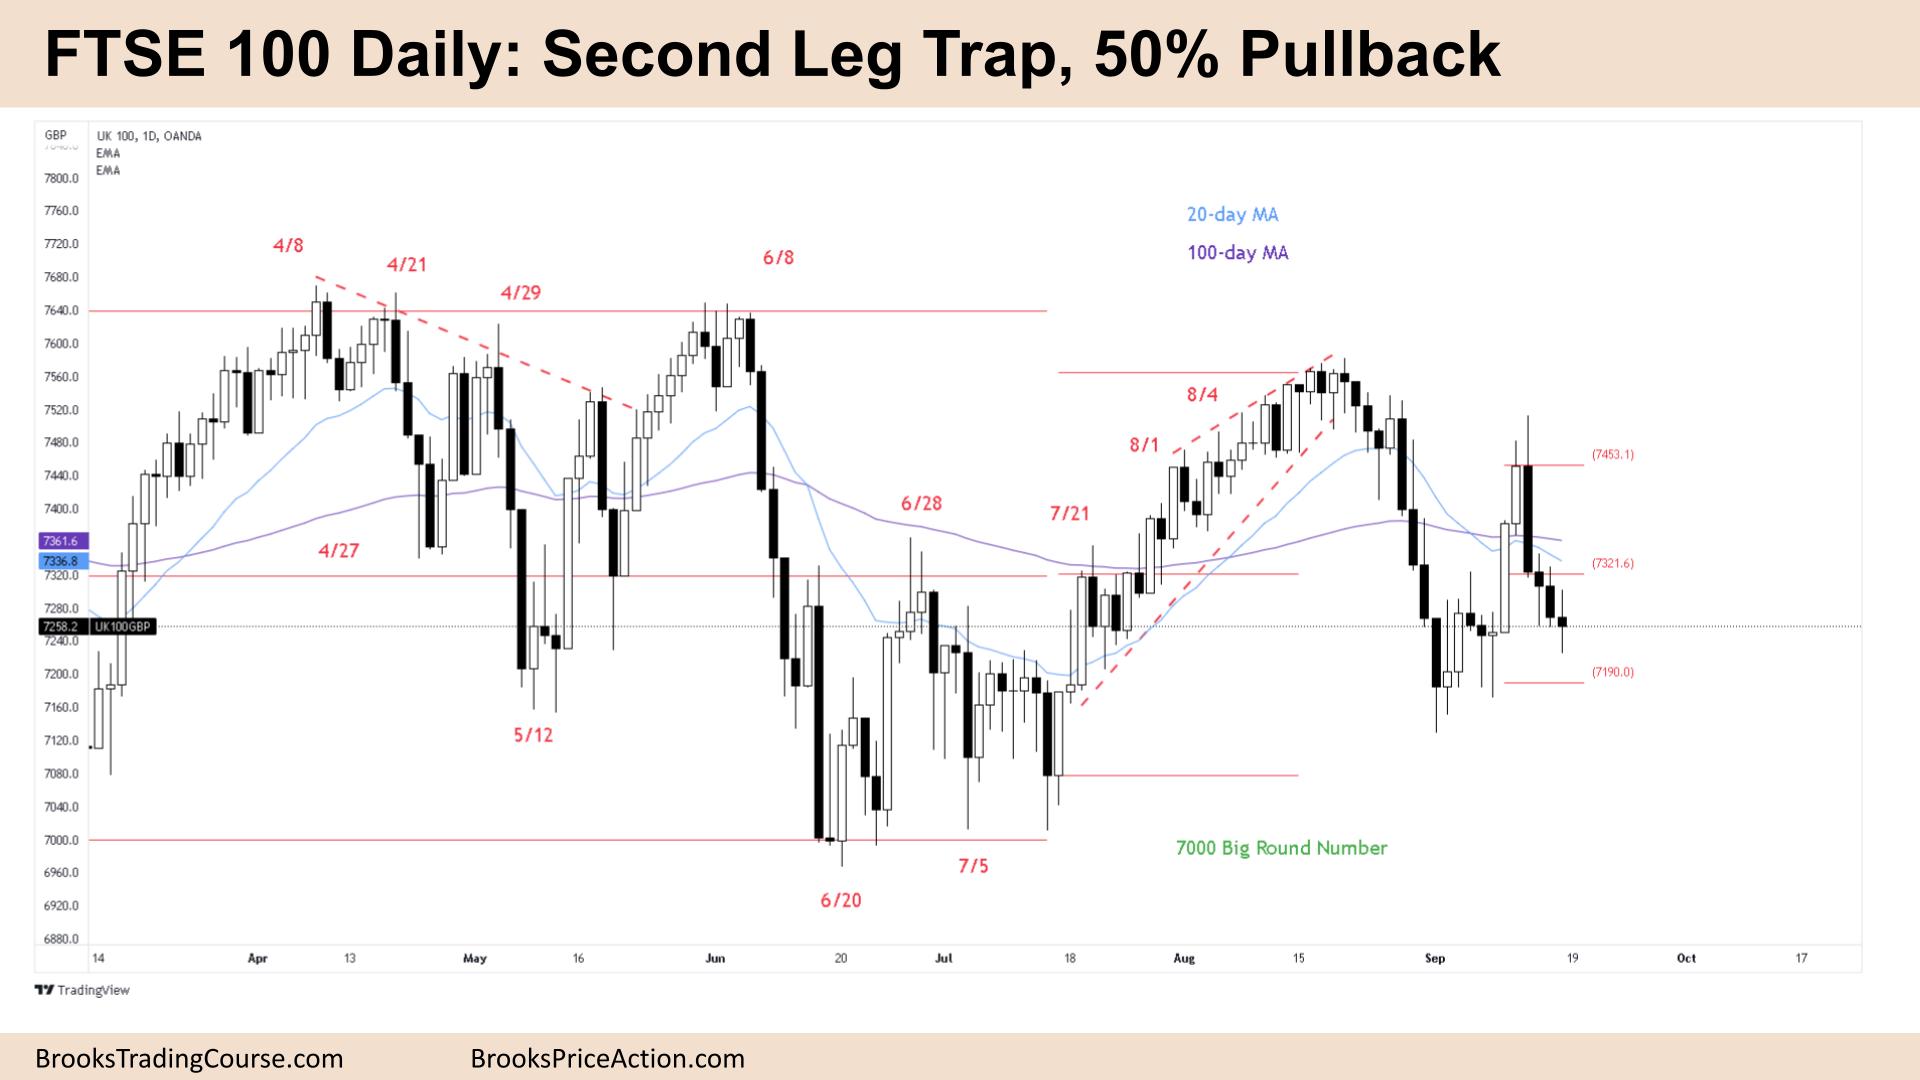 FTSE 100 Daily Second Leg Trap, 50% Pullback